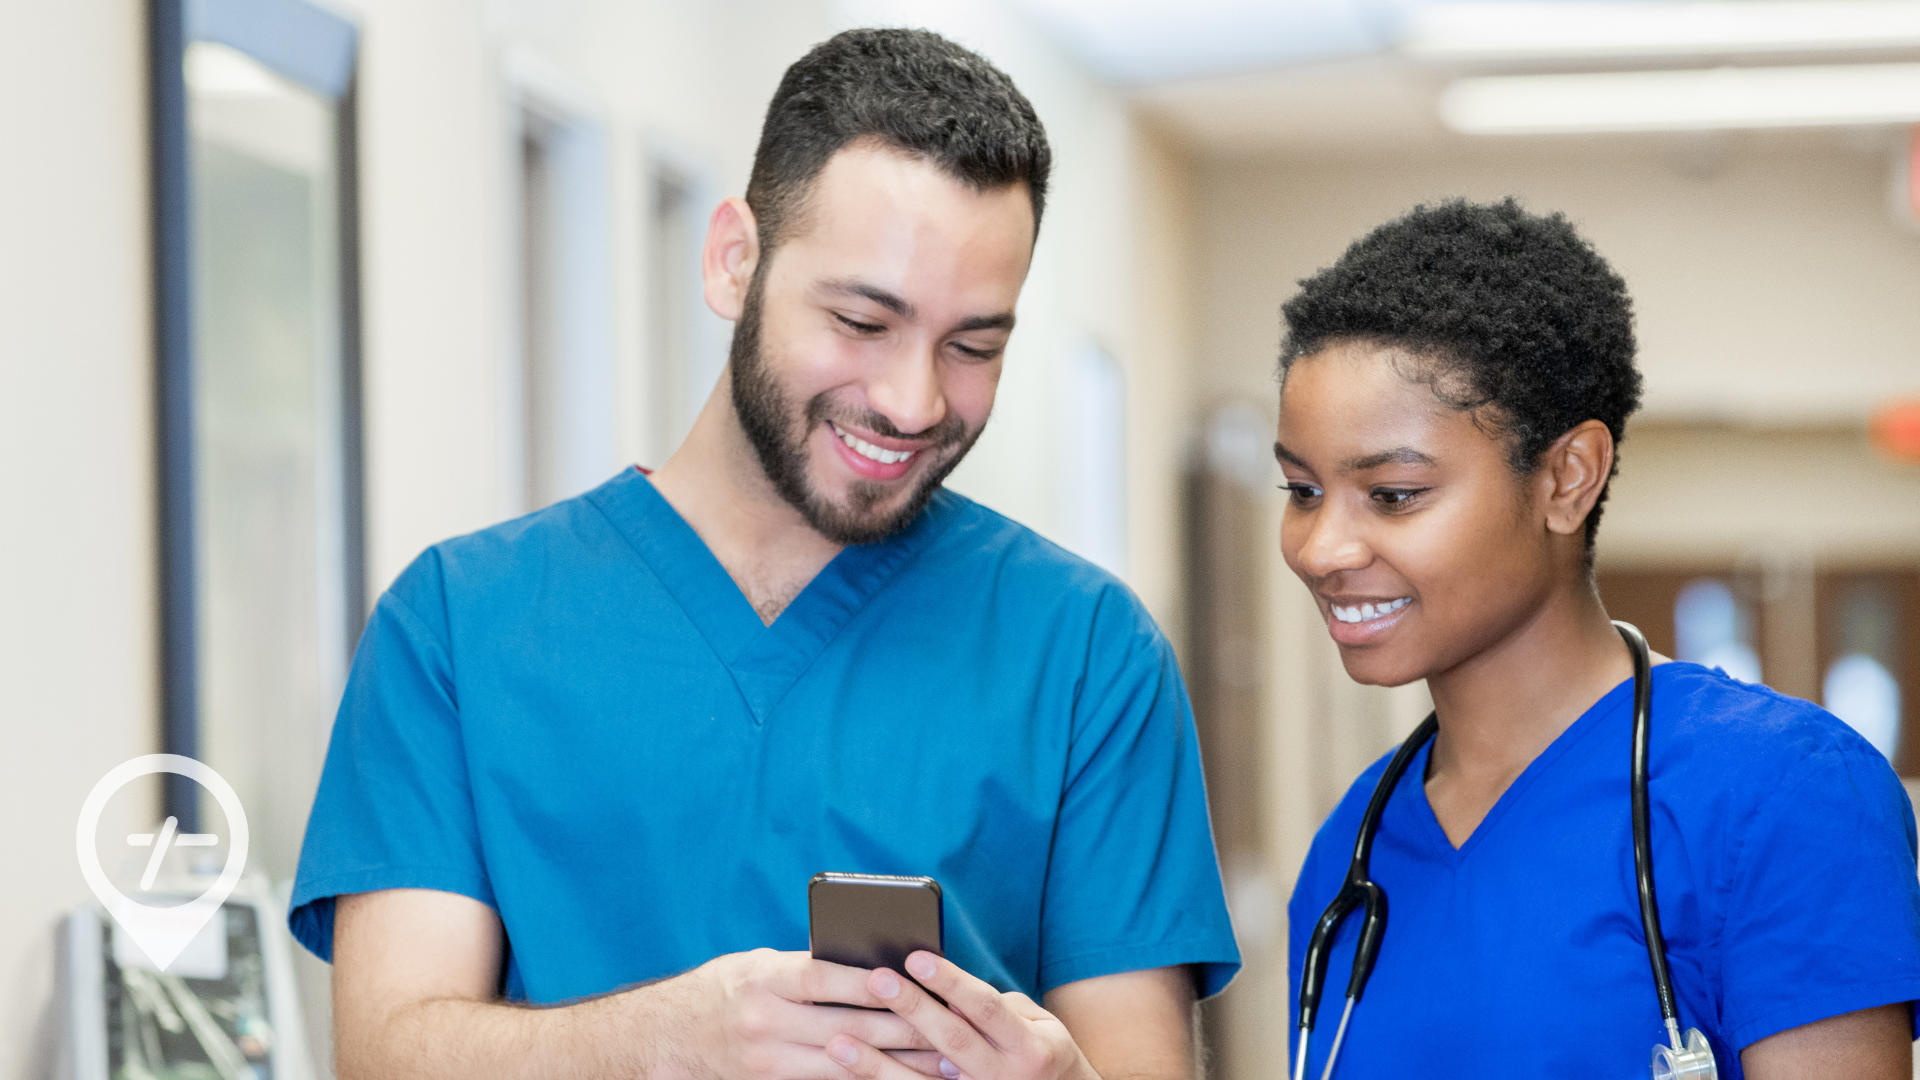 A male nurse shows a female nurse a nursing jobs app on his phone.